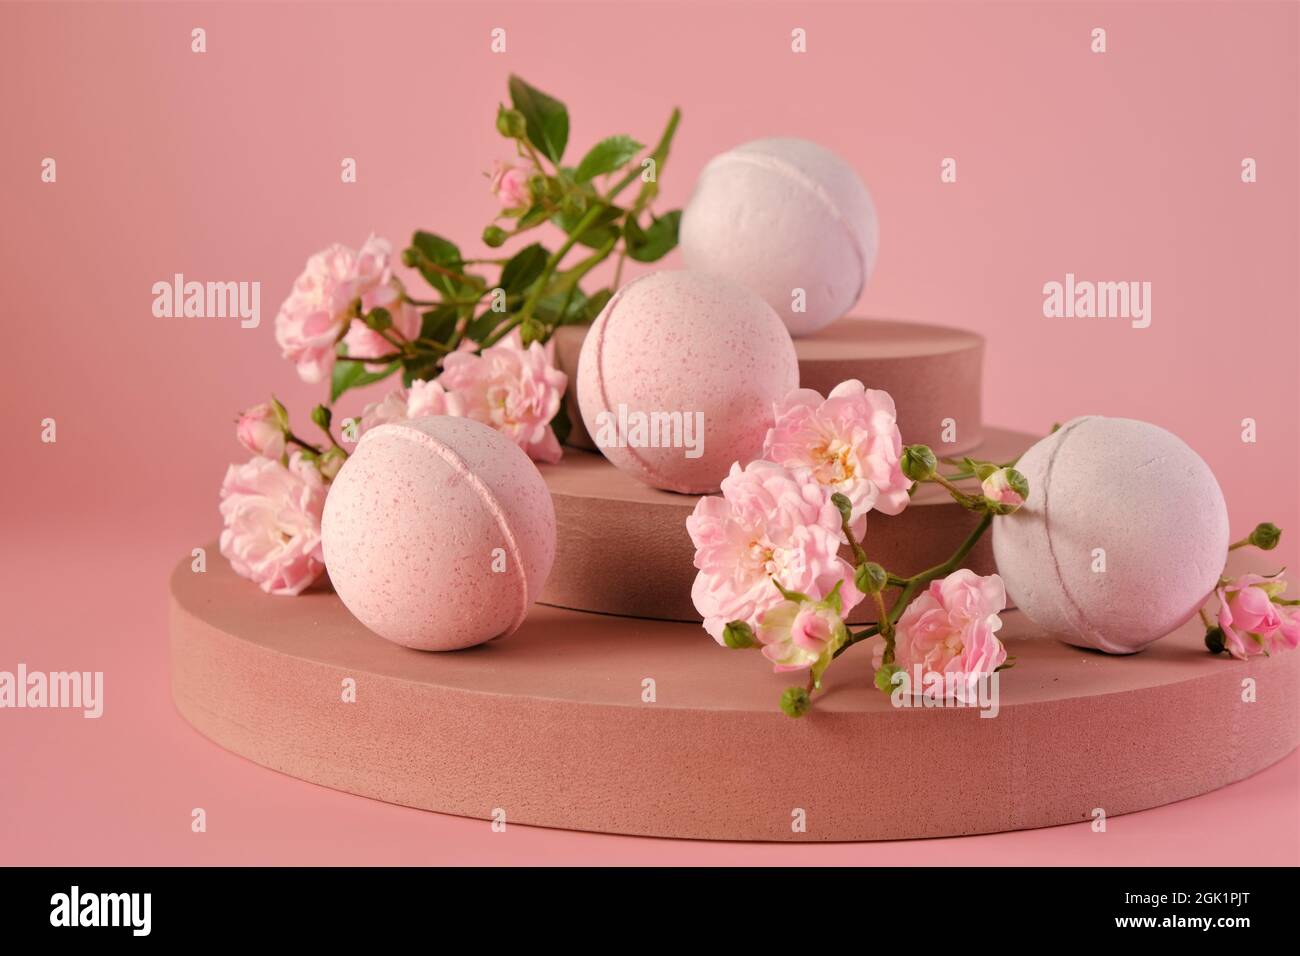 Badebomben mit Rosenextrakt.Rosa Badebomben und rosa Rosenblüten auf burgunderrotem Sockel auf einer rosa background.Organic veganen Kosmetik. Natürlich Stockfoto